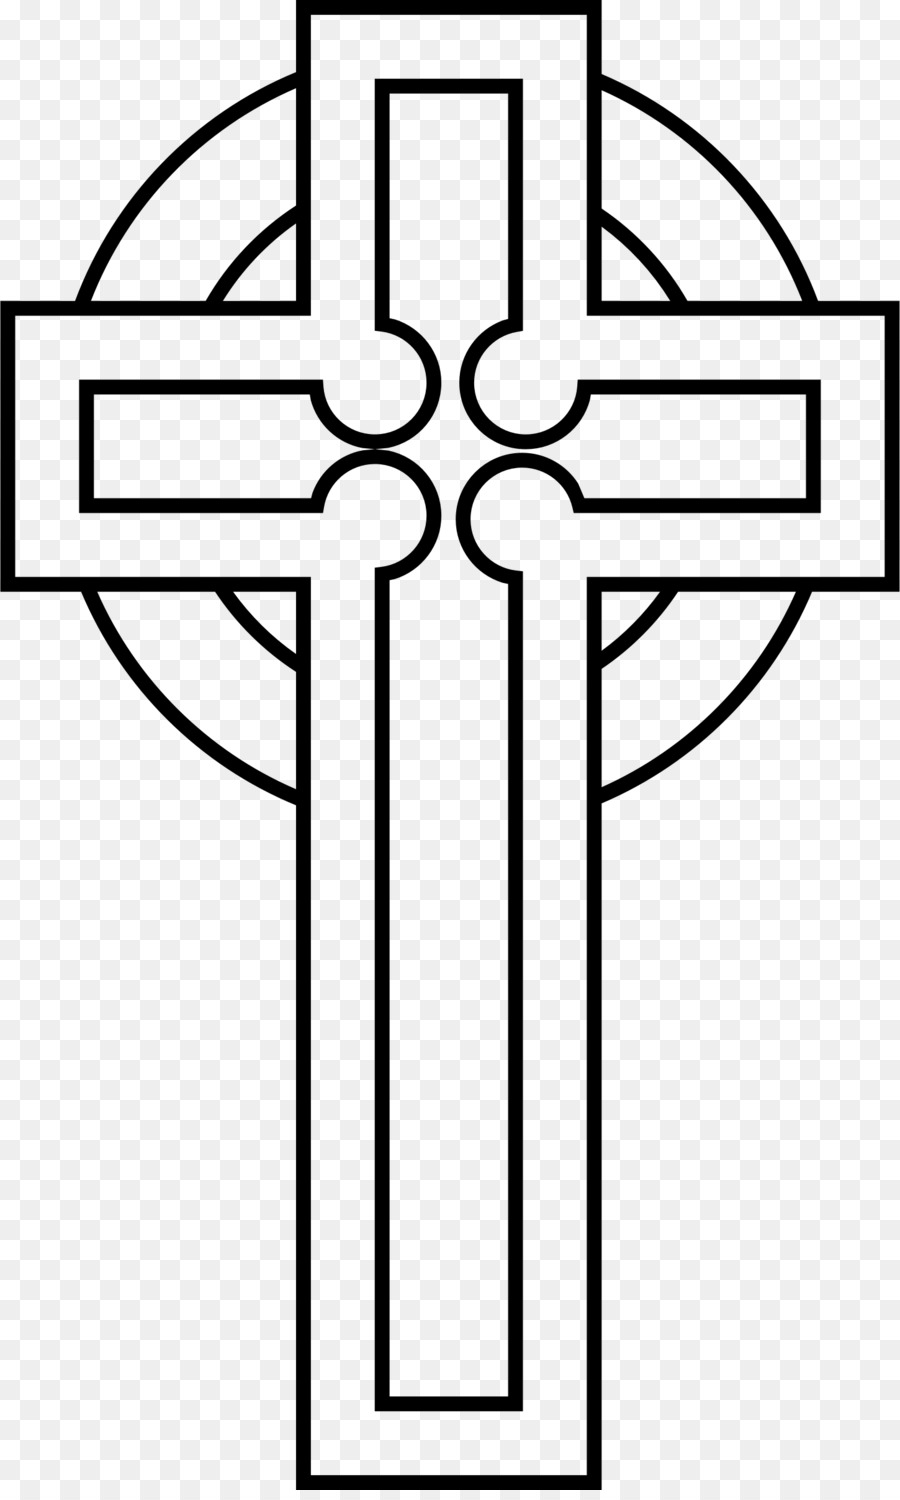 Celtic knot Celtic cross Clip art - cross png download - 1450*2400 - Free Transparent Celtic Knot png Download.